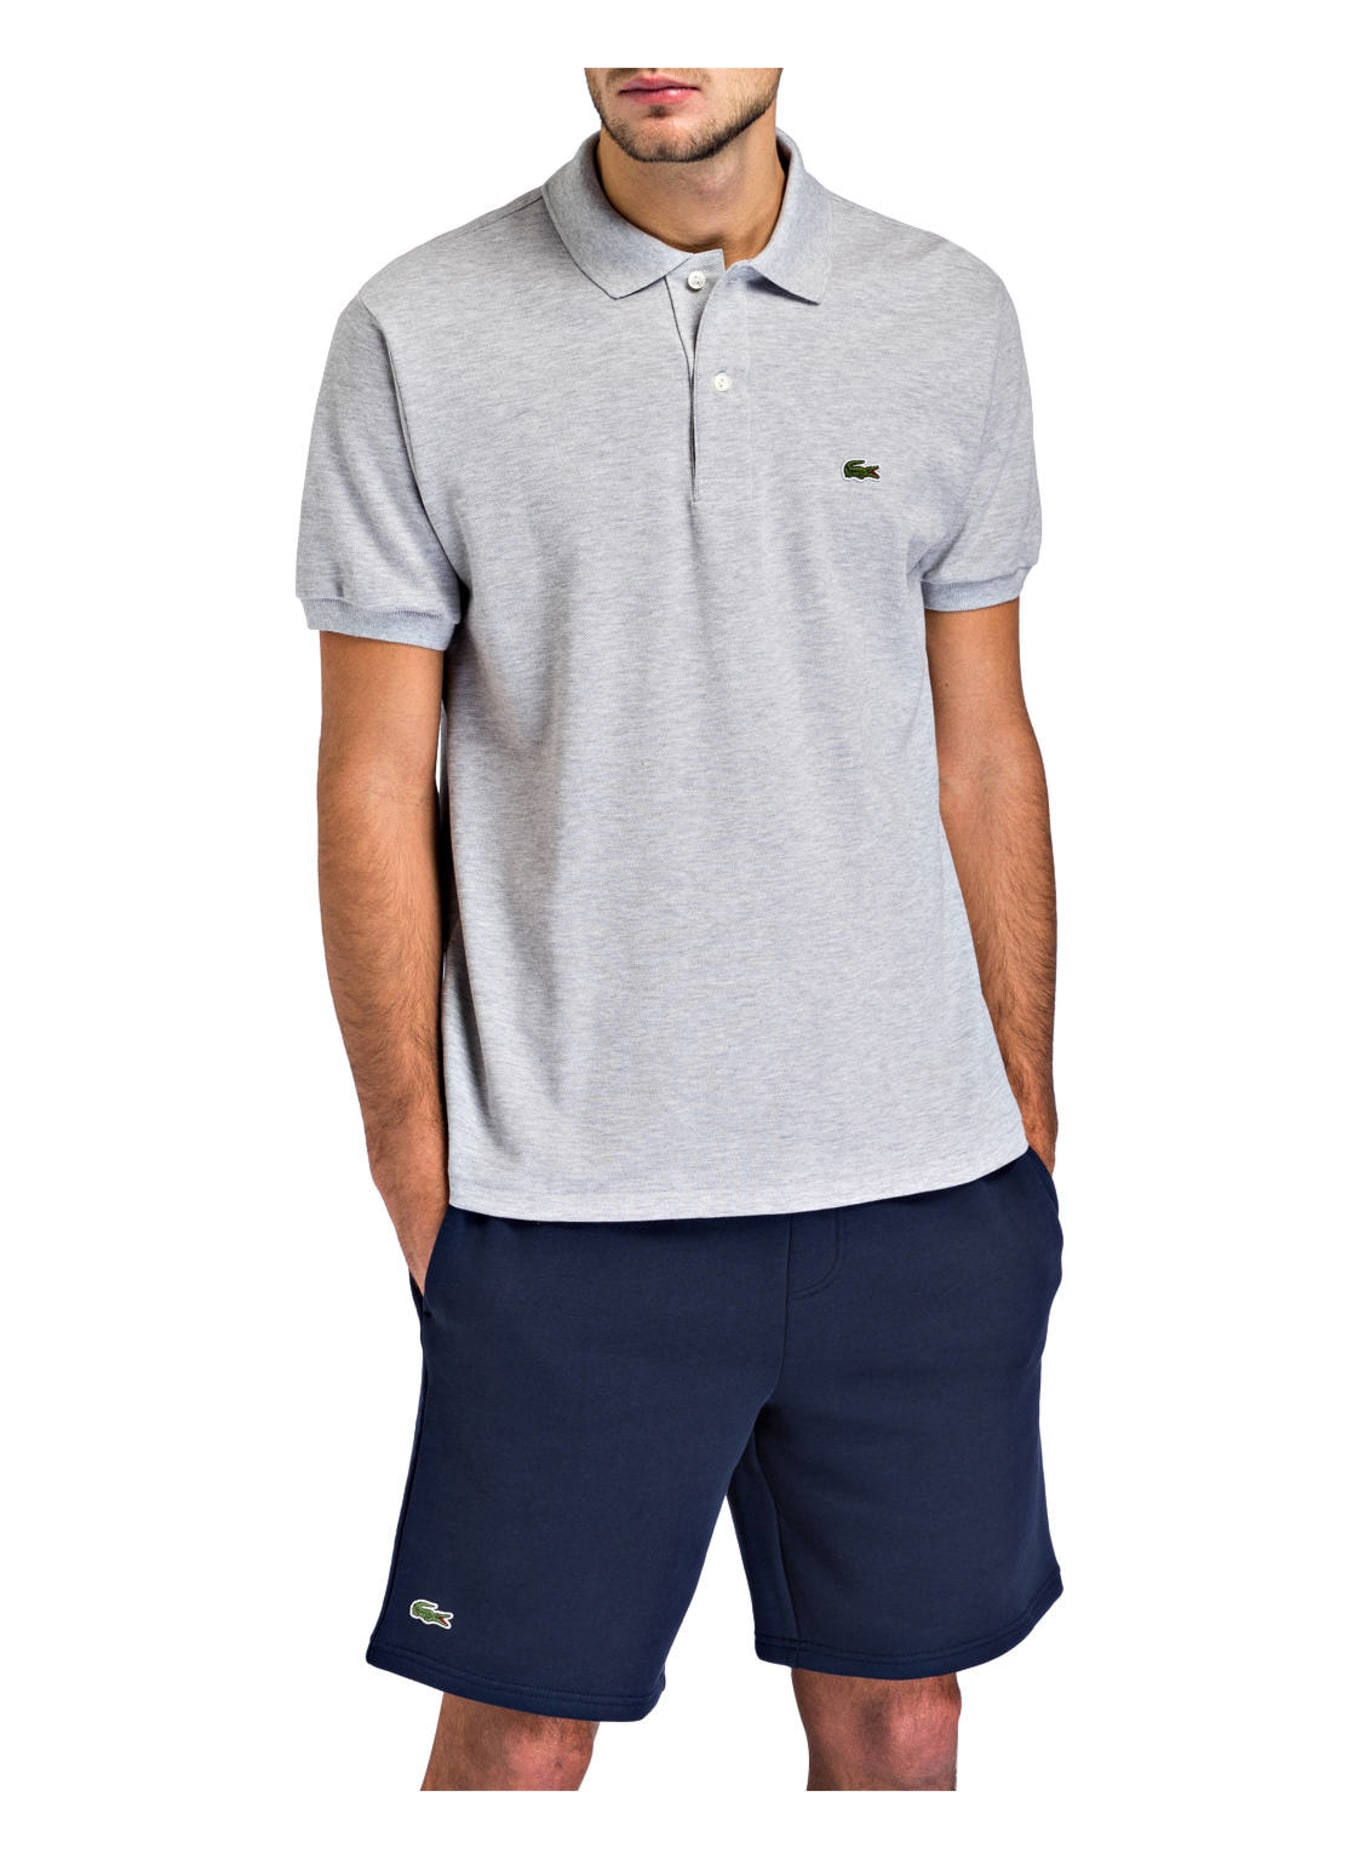 LACOSTE Piqué-Poloshirt Classic Fit, Farbe: GRAU MELIERT (Bild 2)